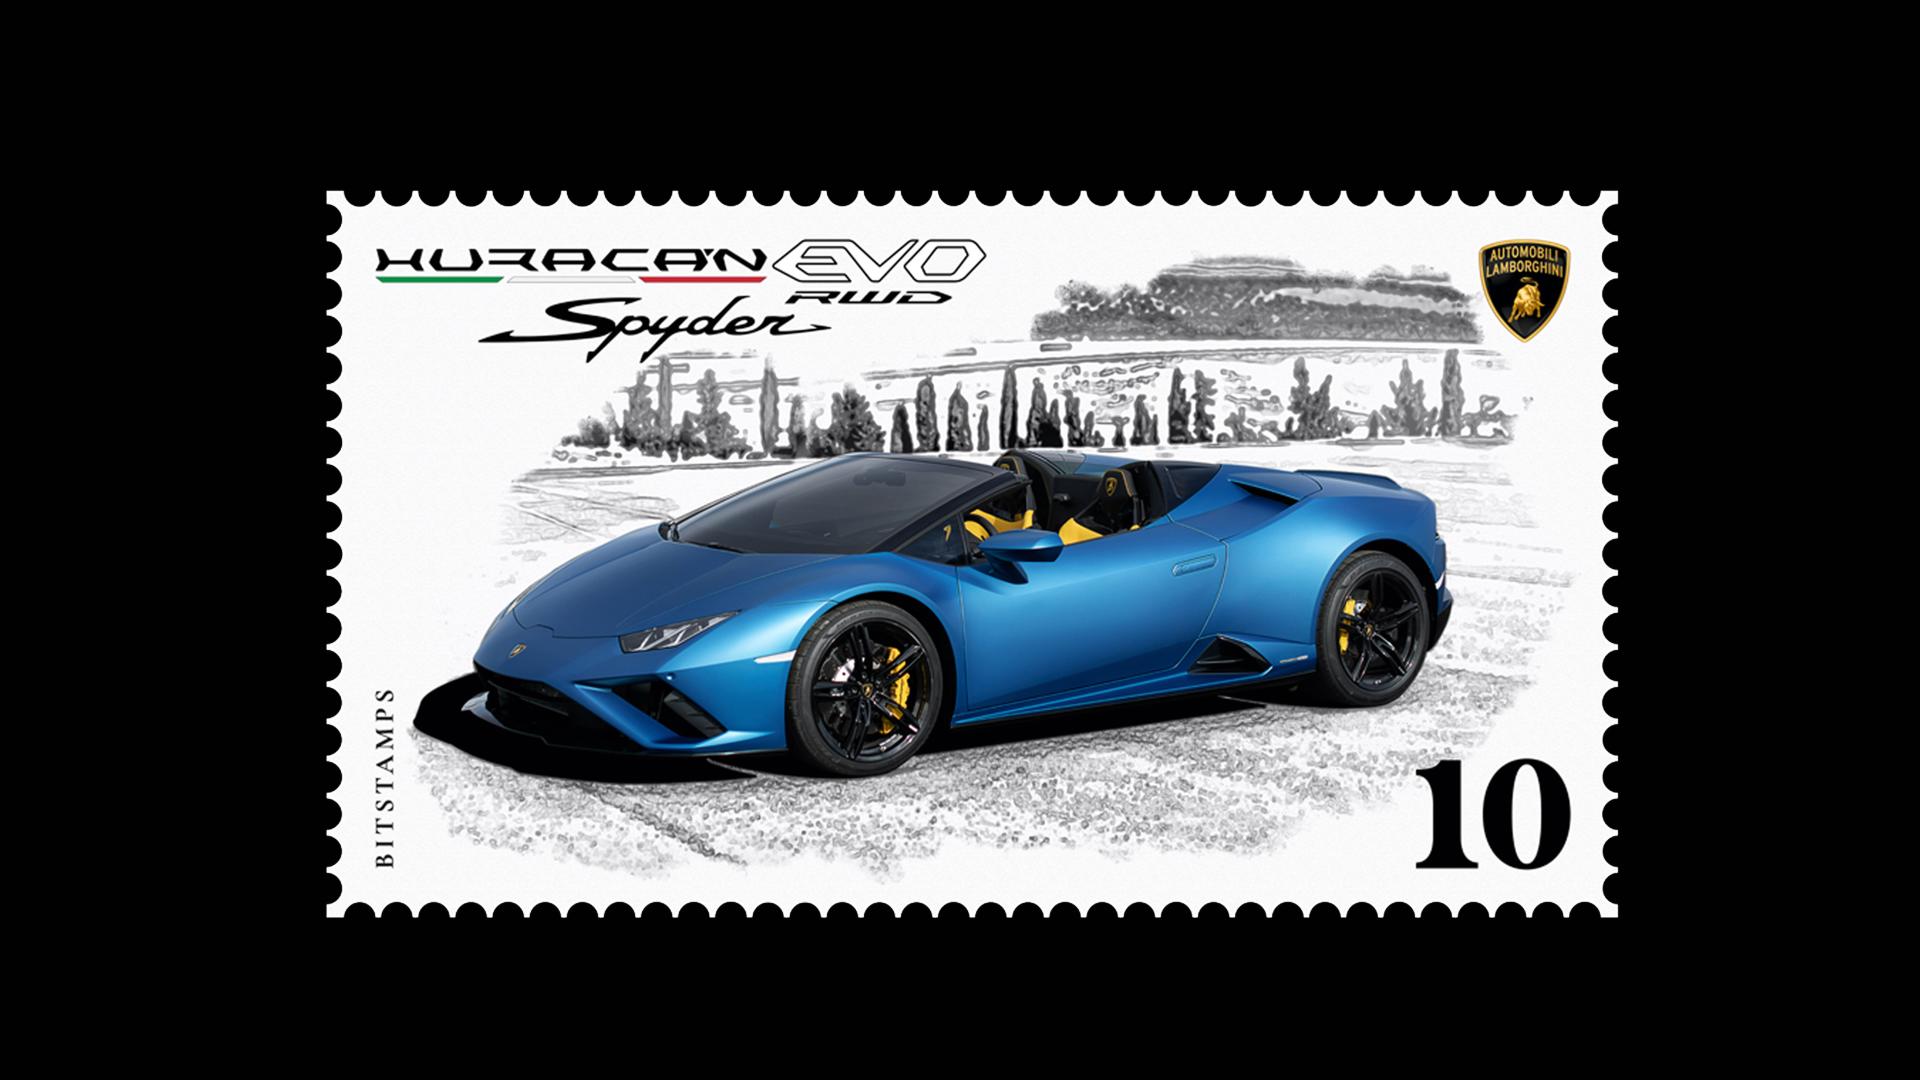 Lamborghini francobollo Bitstamps